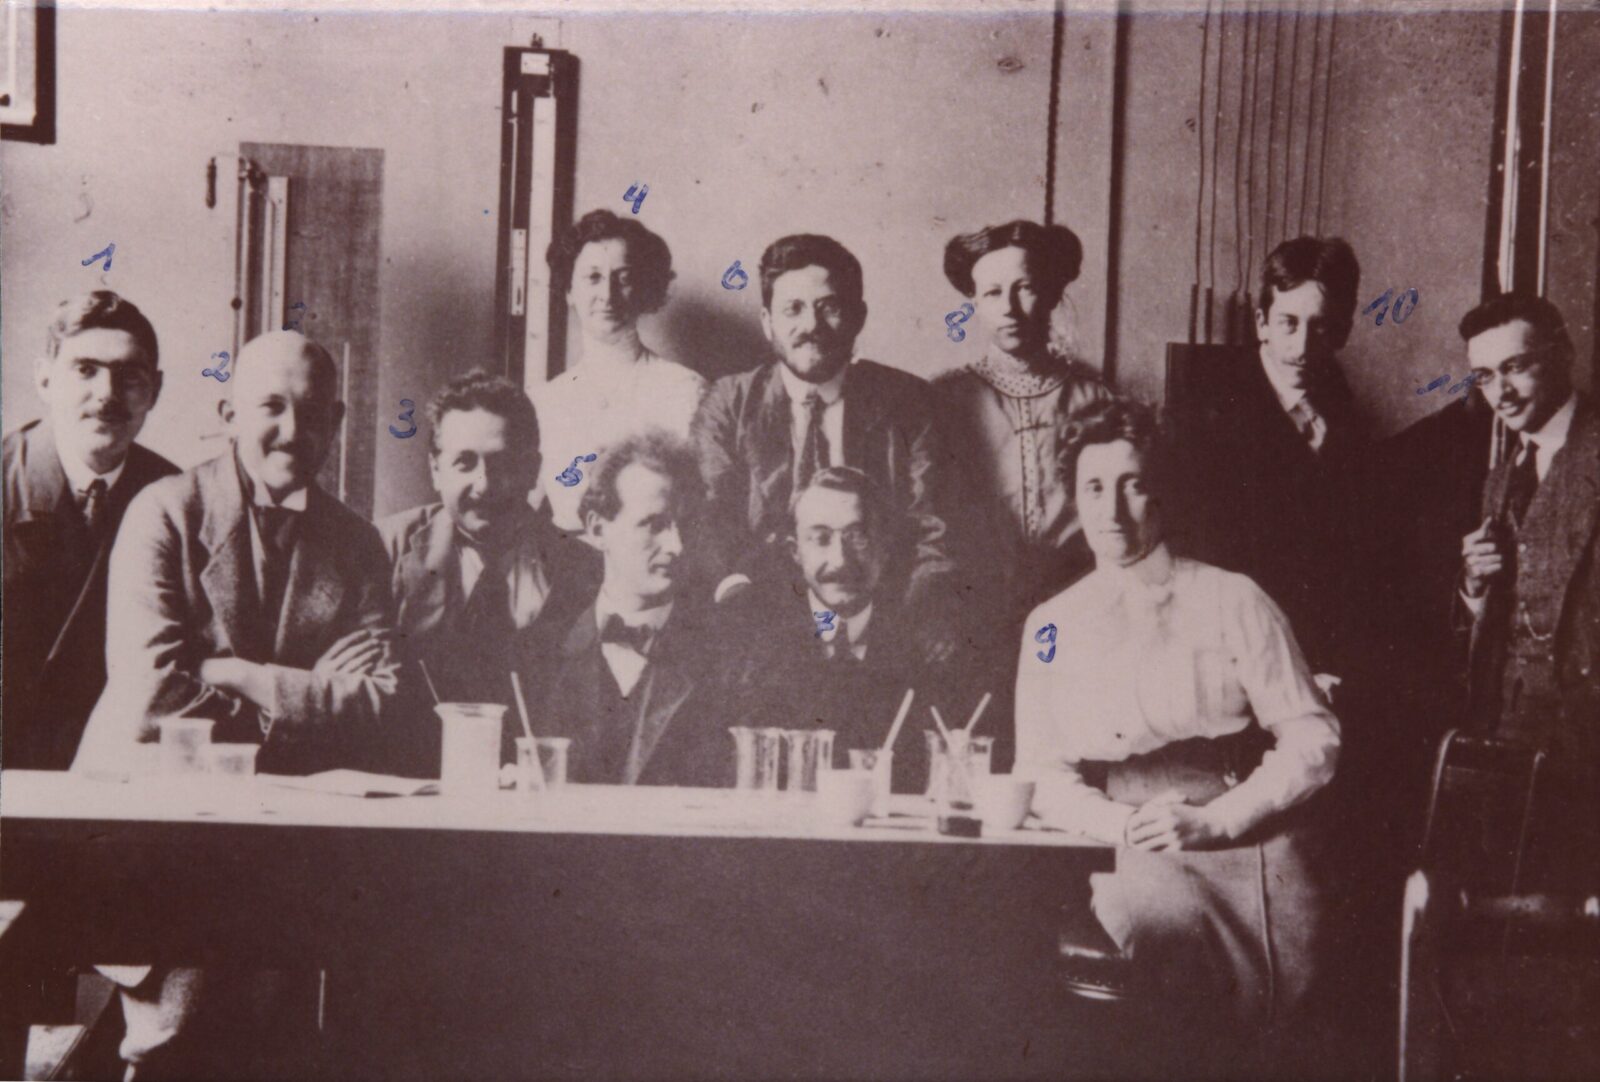 Einstein, Albert and colleagues in the ETH Zurich physics laboratory.